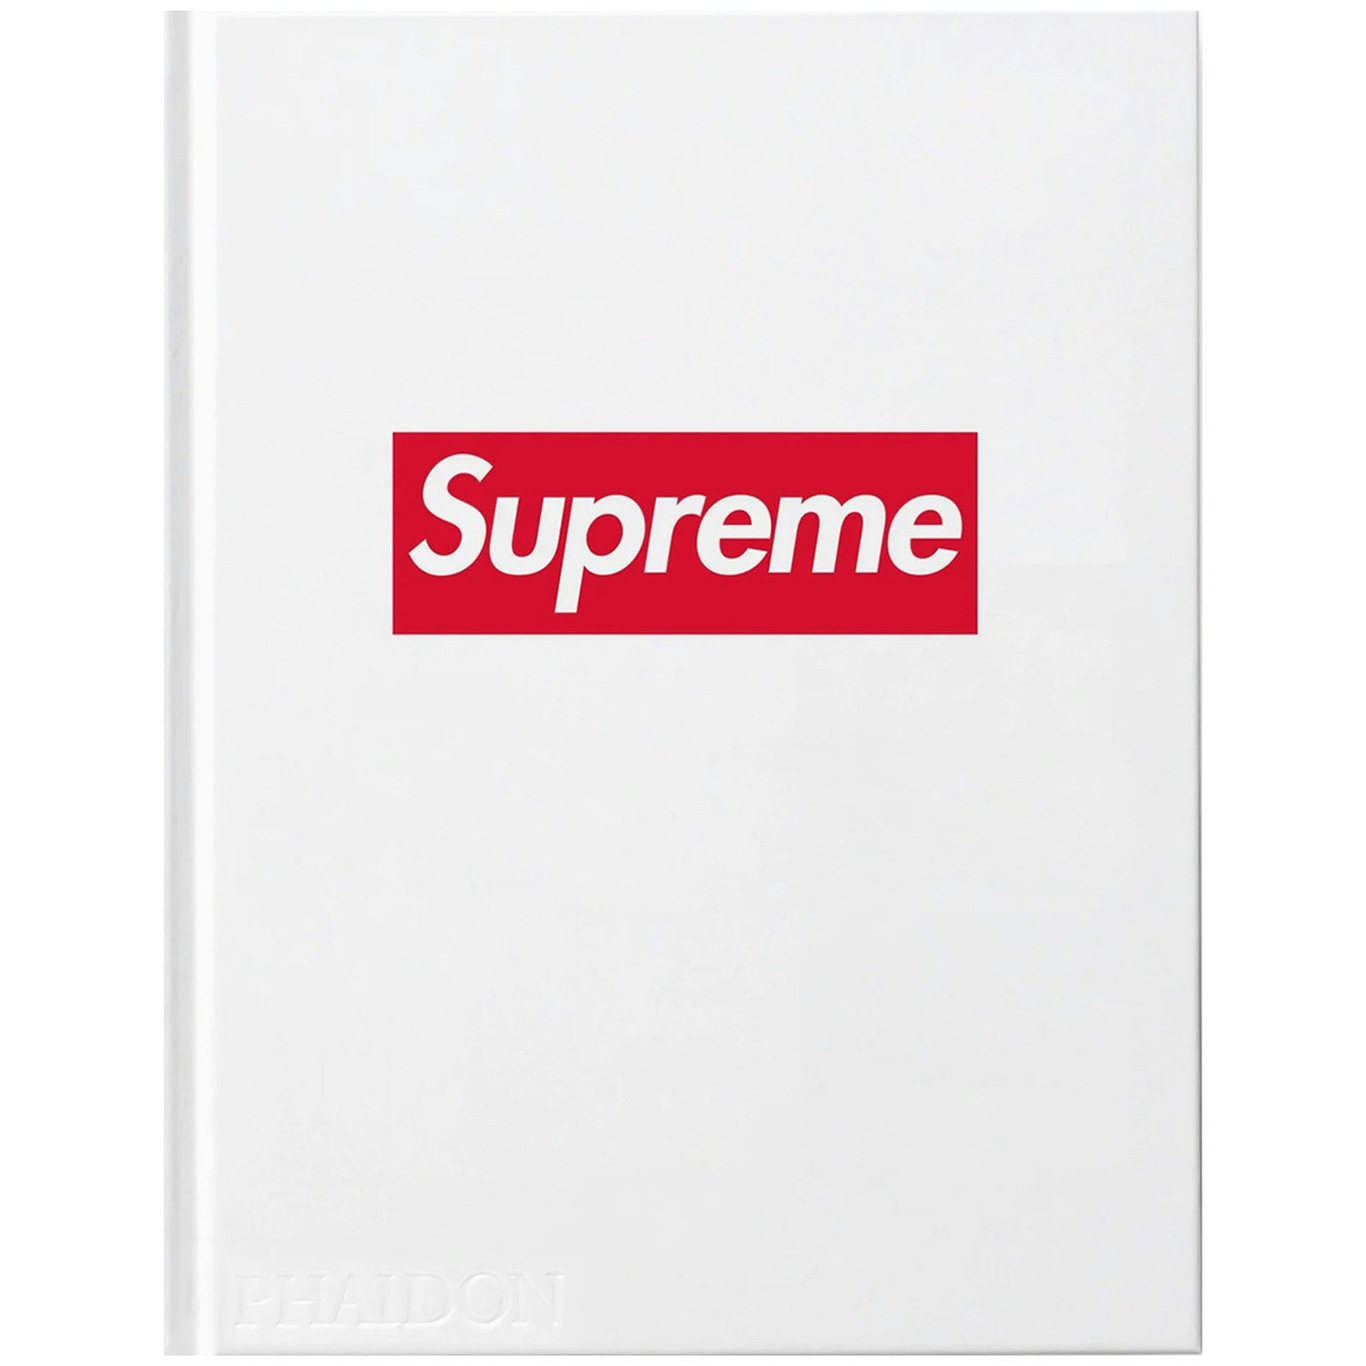 Supreme – by Phaidon Book